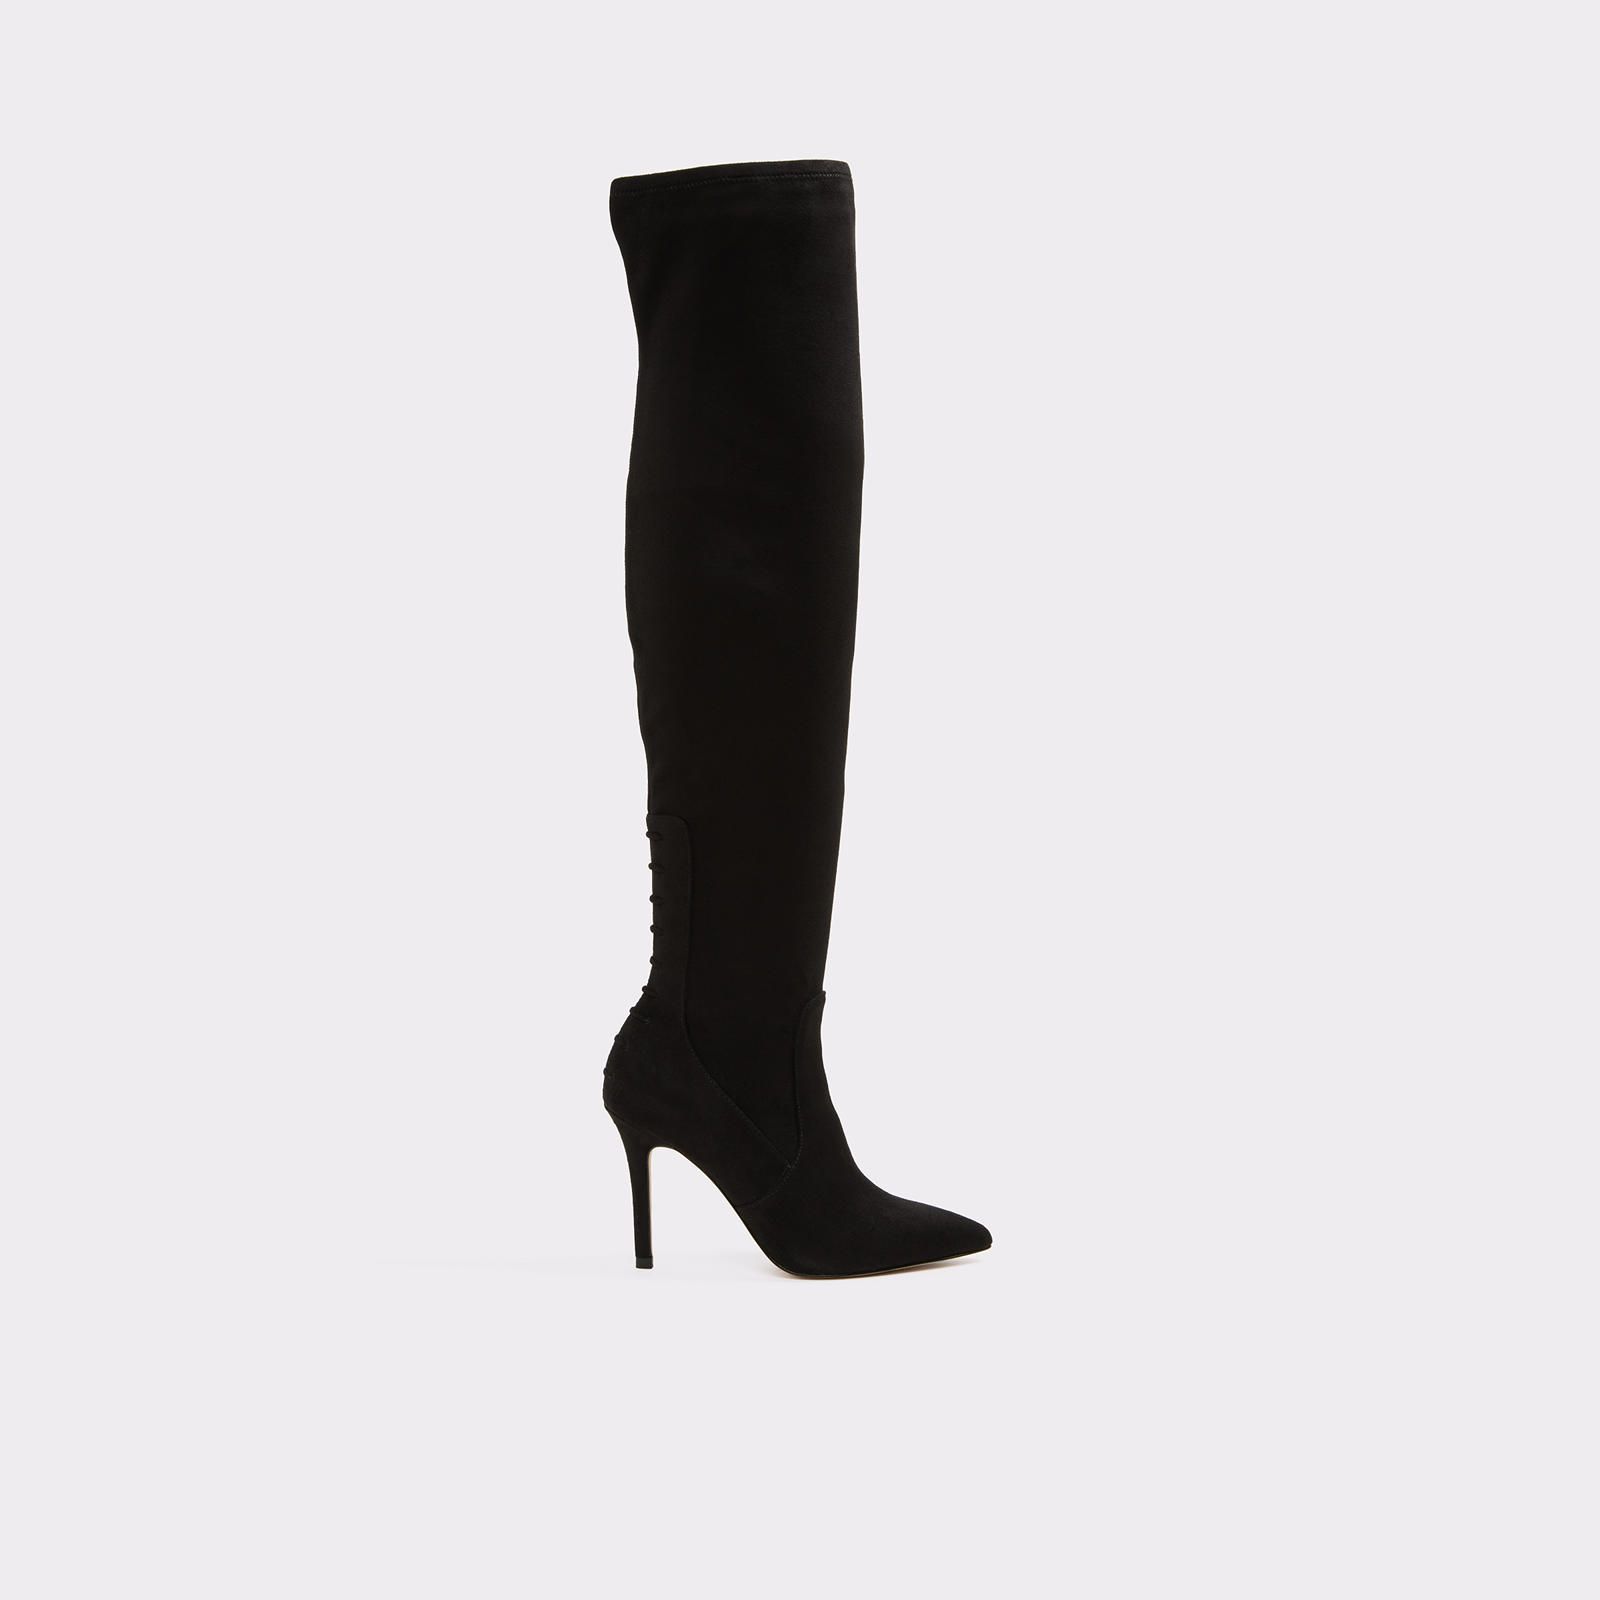 ALDO Mereallyra - Women's Boots - Black, Size 5 | Aldo Shoes (US)